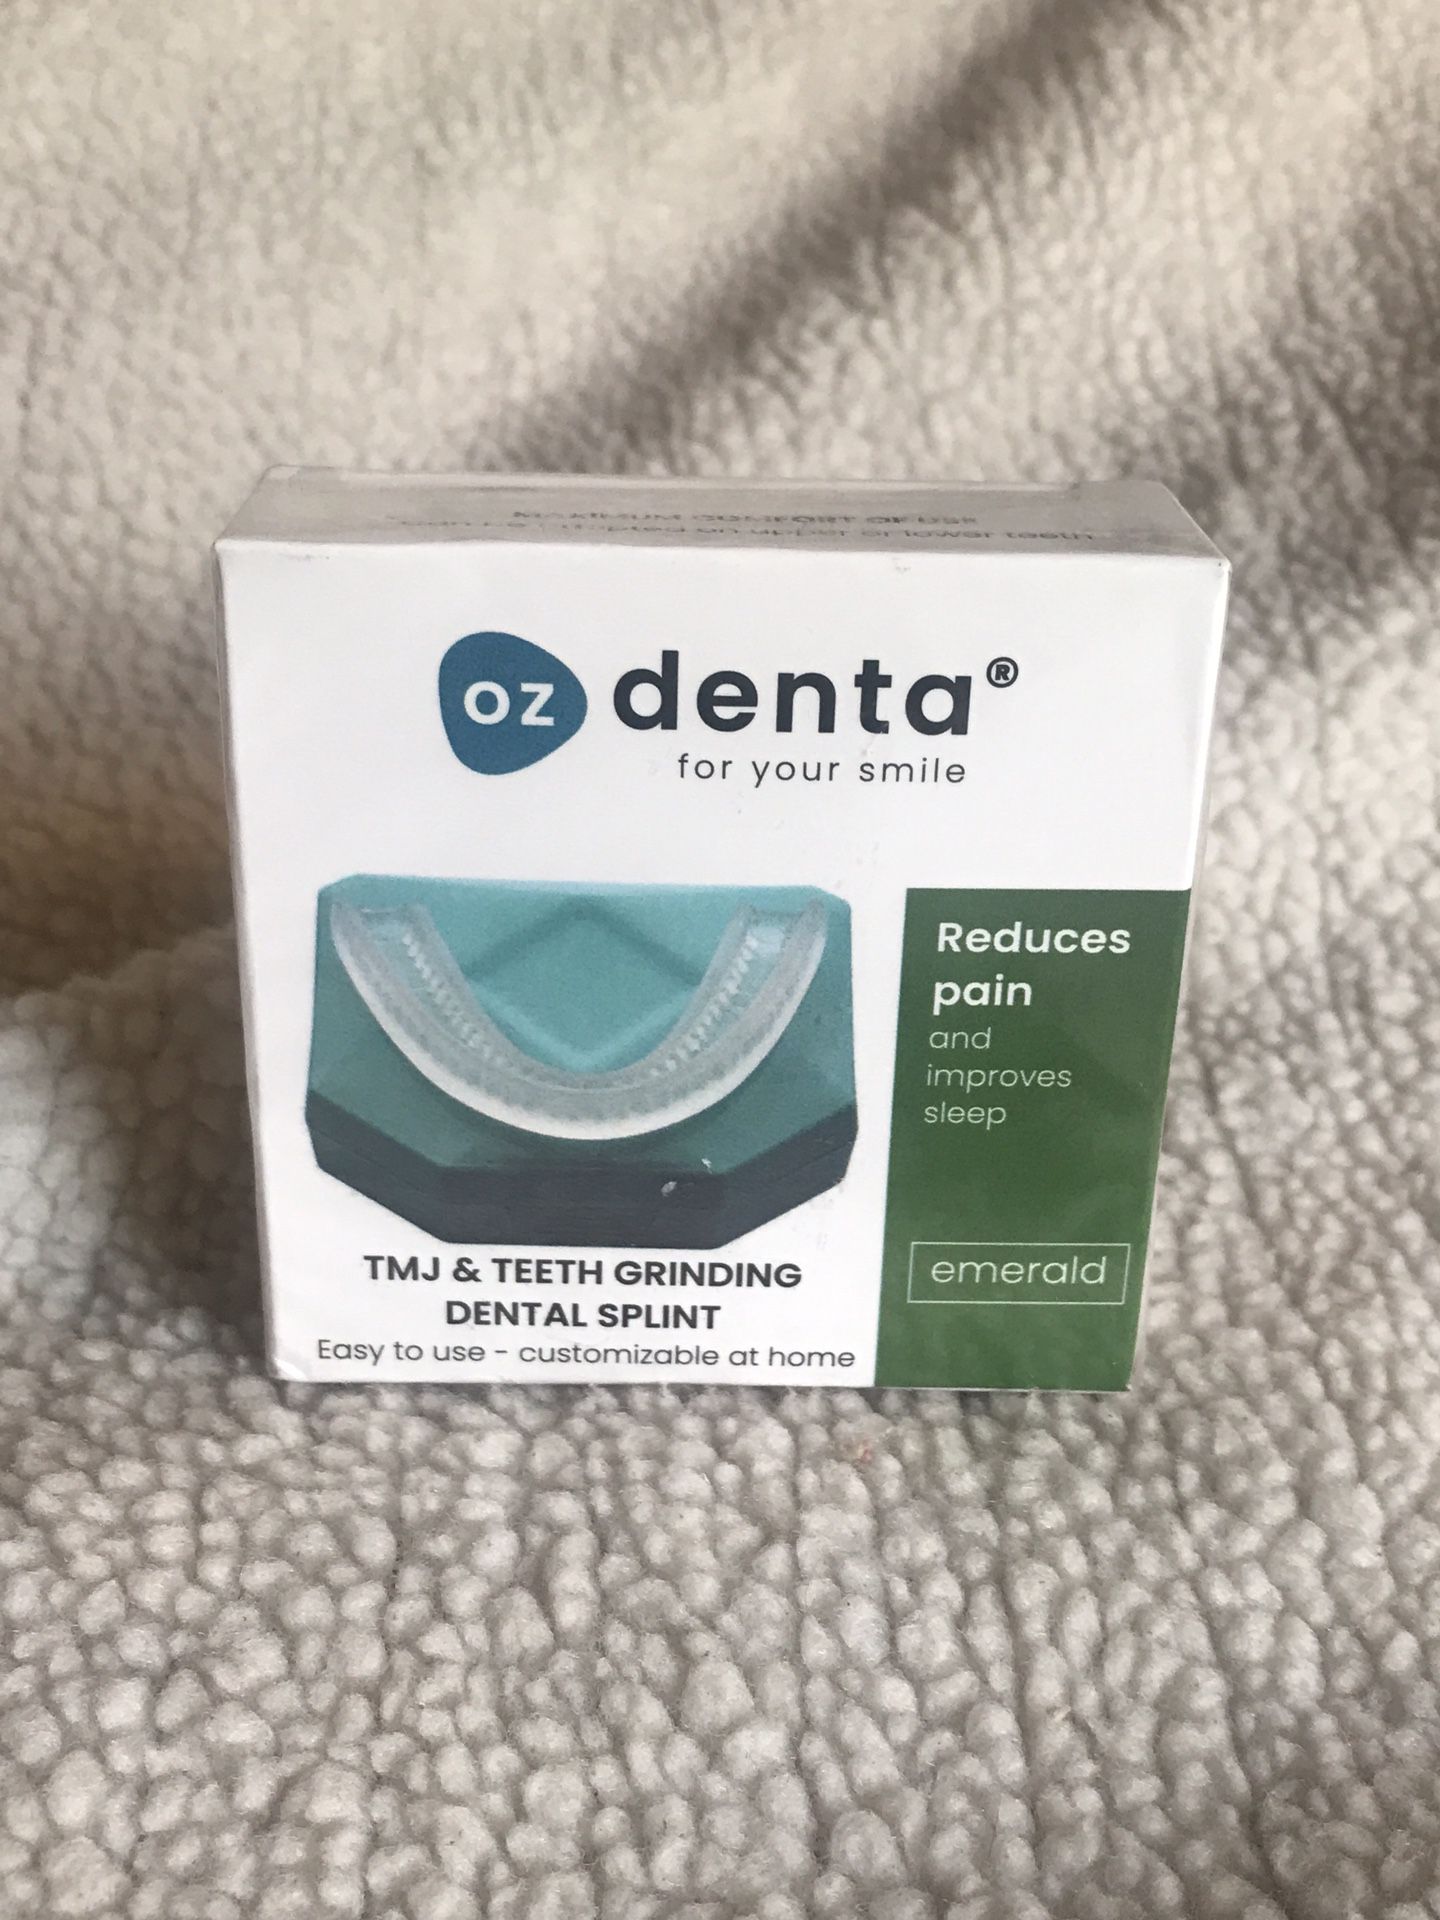 Oz Denta TMJ, Teeth Grinding Splint-emerald